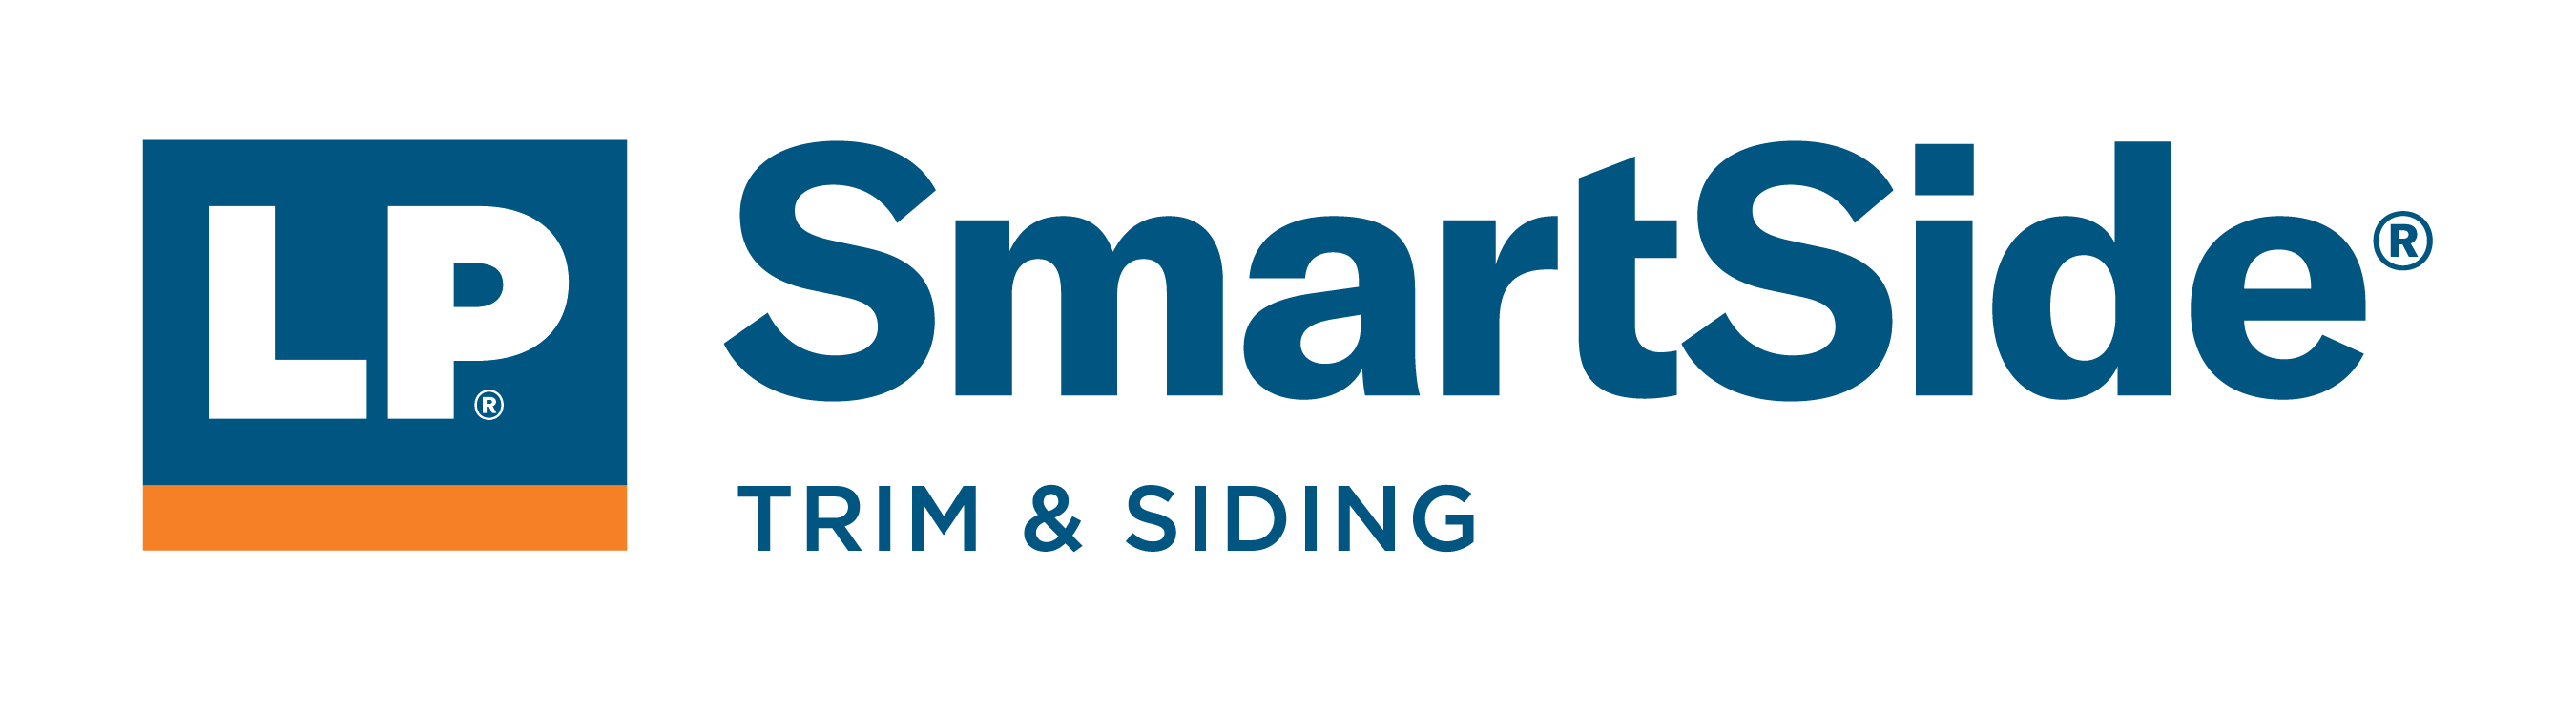 Exteriors by Highmark LP Smart Side siding